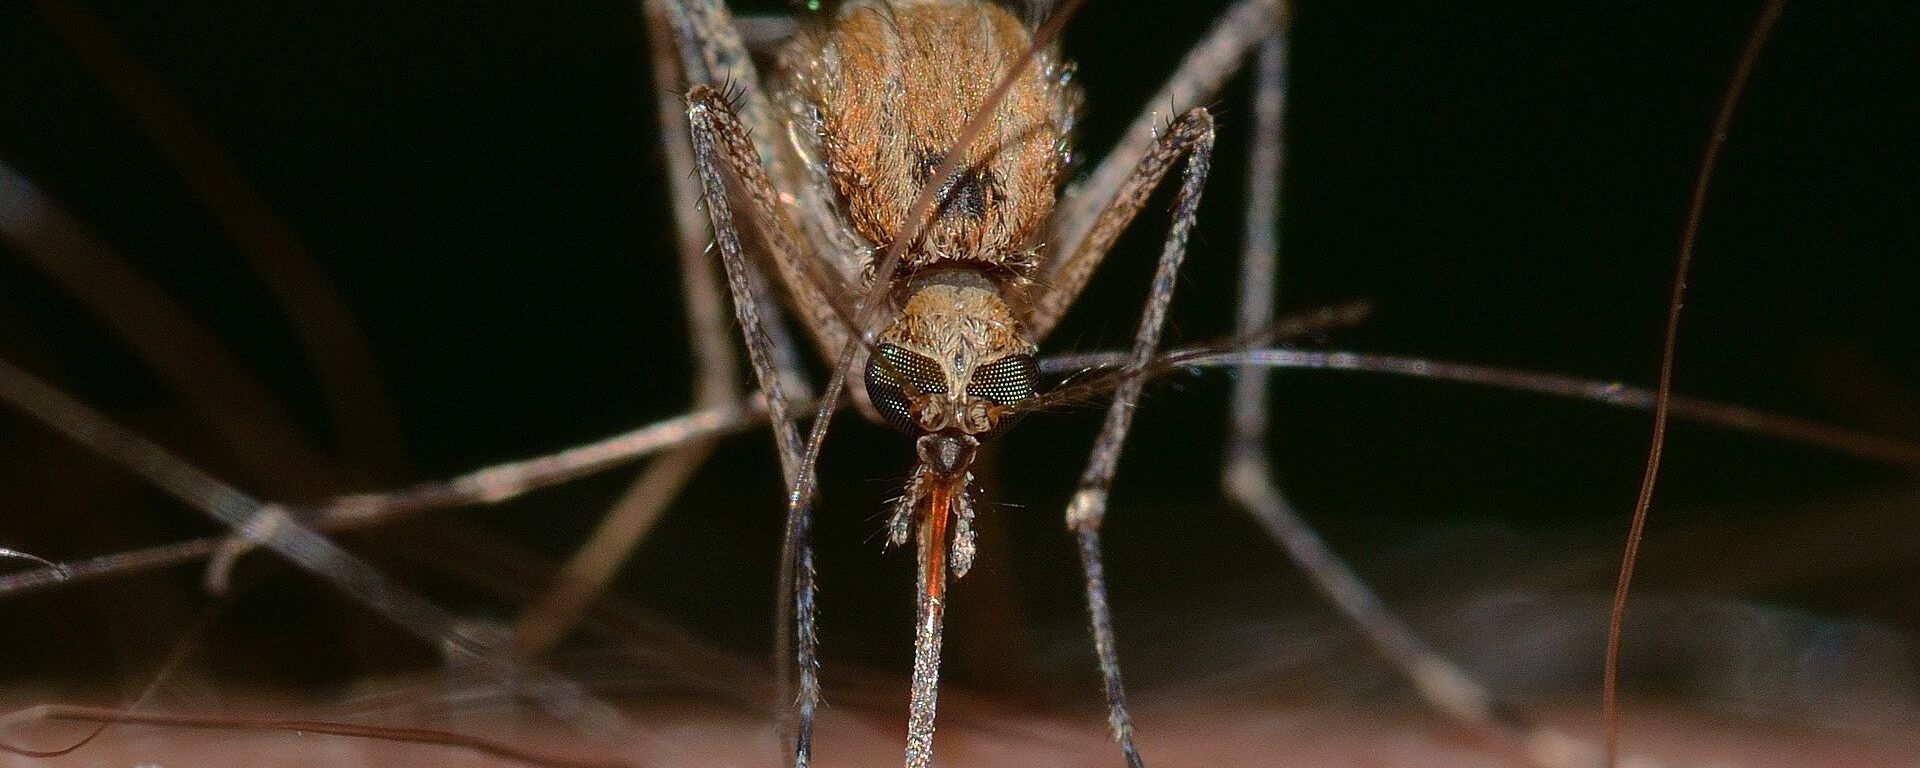 Mosquito - Sputnik International, 1920, 18.08.2021